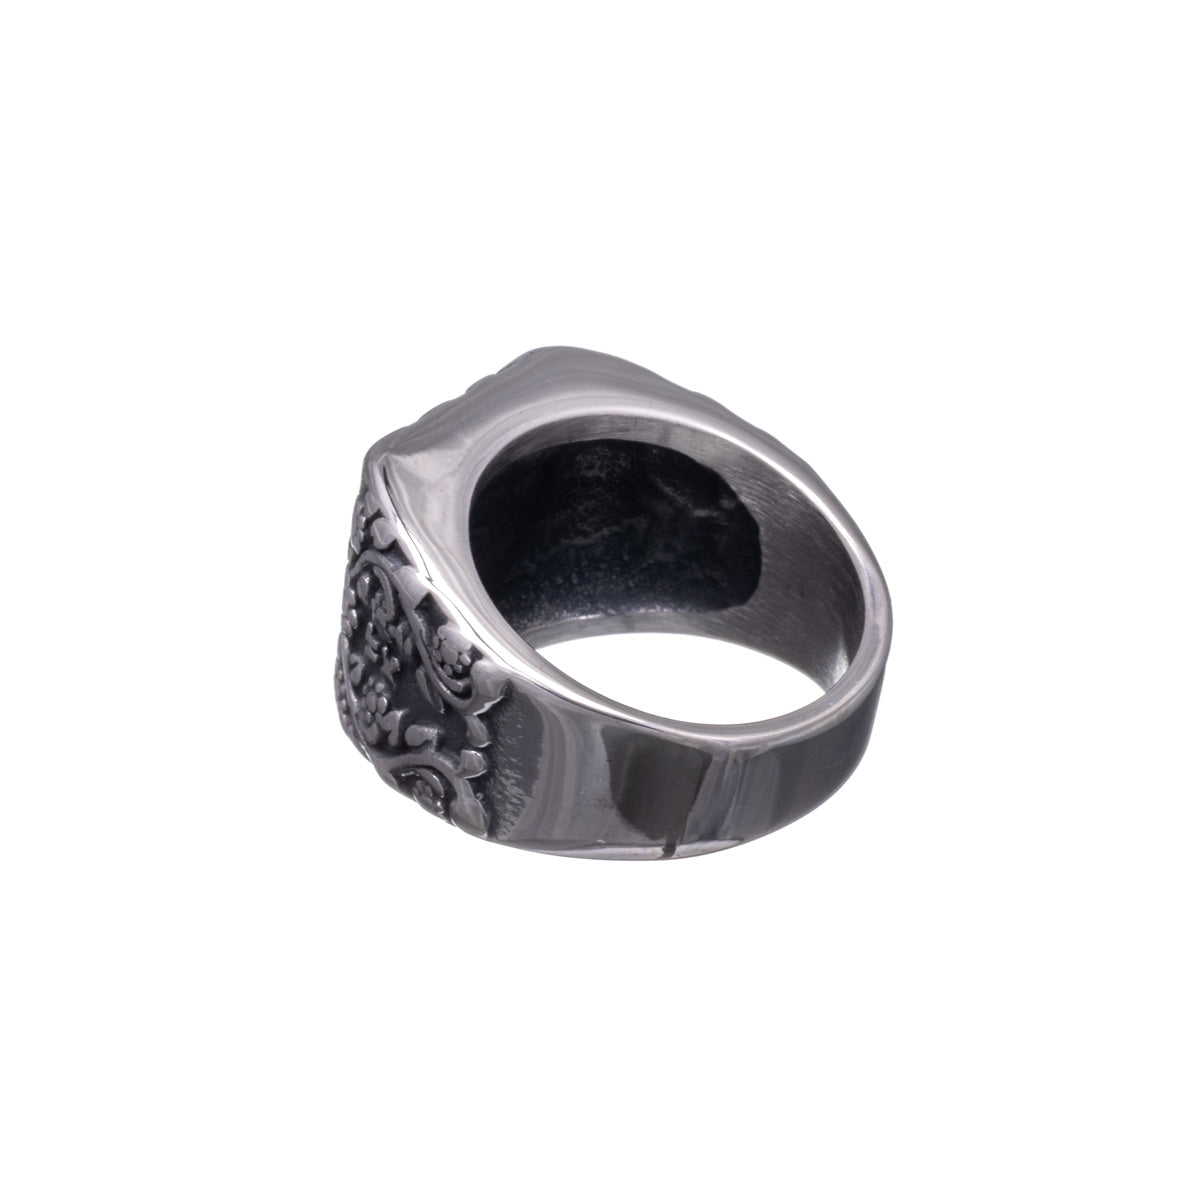 Ace of spades wedding ring steel ring (Steel 316L)